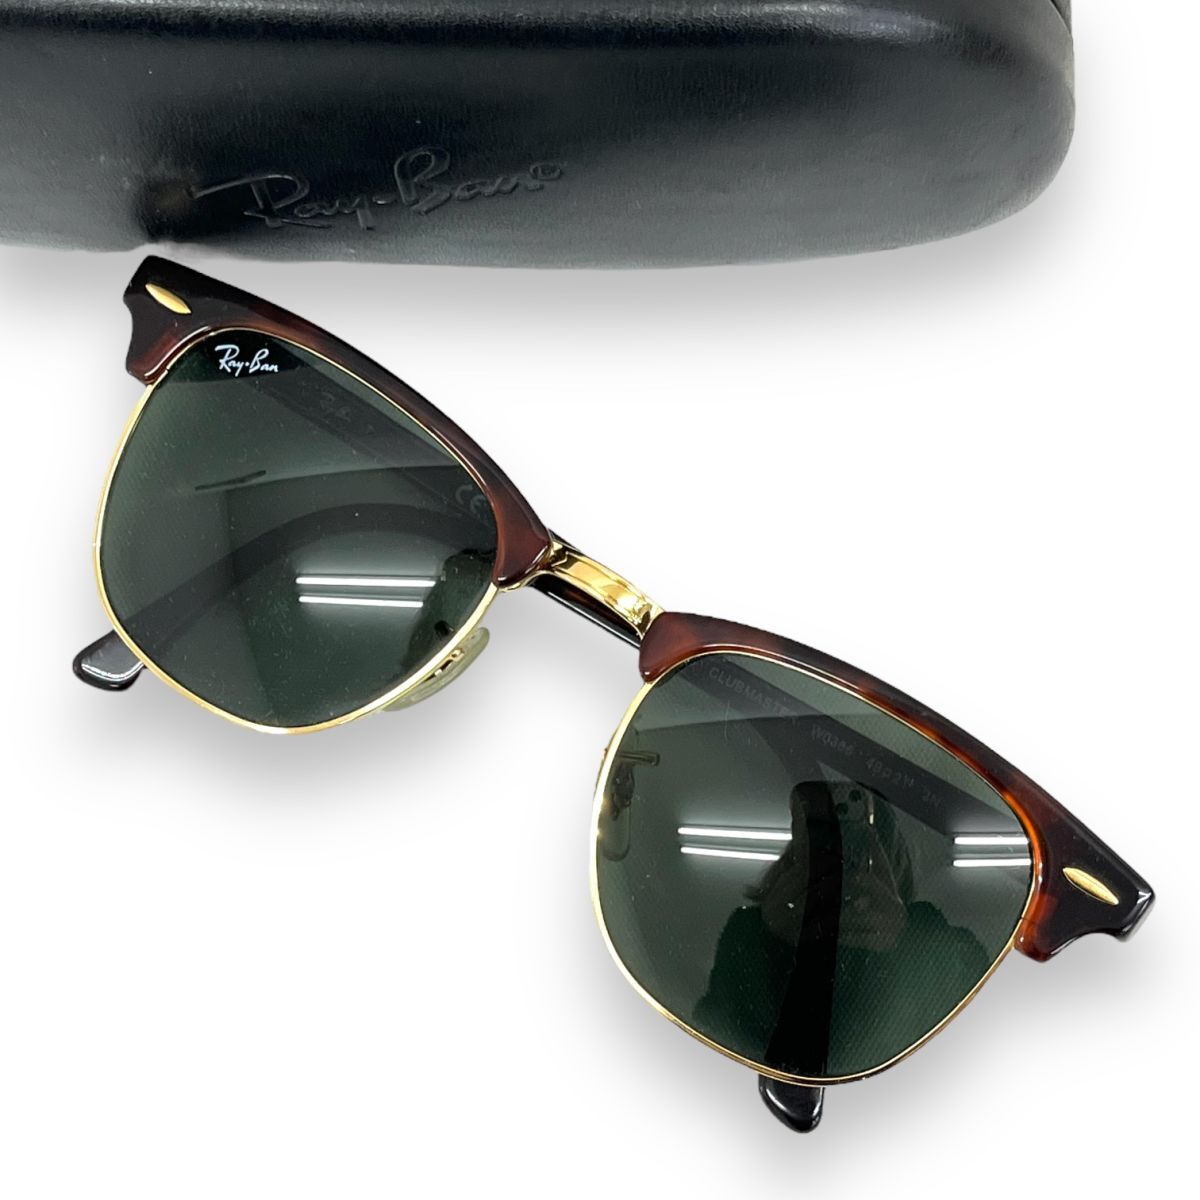 Ray-Ban RayBan солнцезащитные очки очки мелкие вещи I одежда мода с футляром бренд ClubMaster CLASSIC Clubmaster RB3016 зеленый 